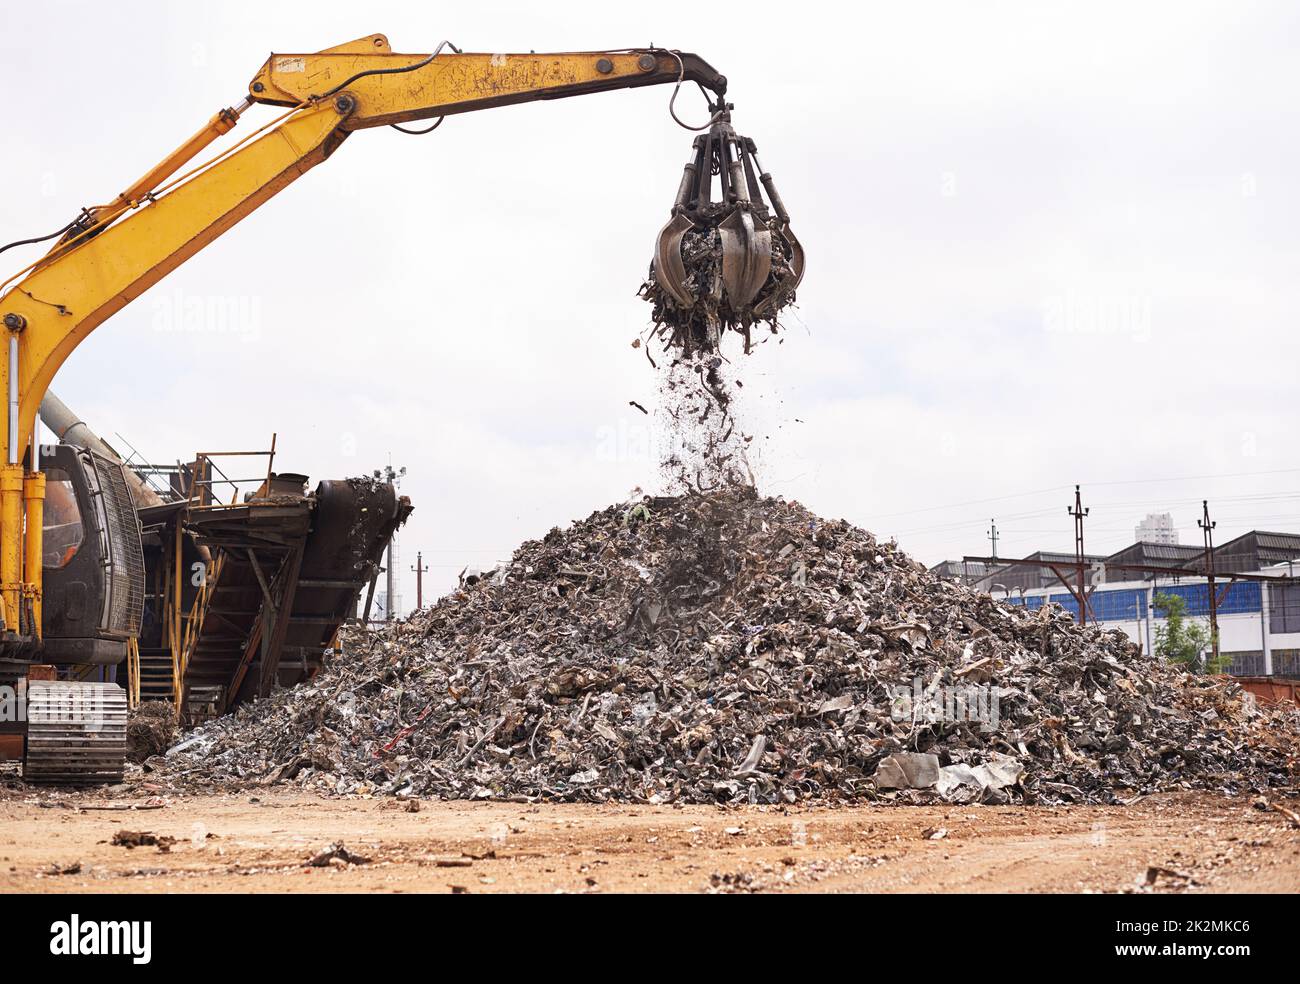 Industrial re-purposing. Cropped shot of an excavator sorting through a pile of scrap metal. Stock Photo